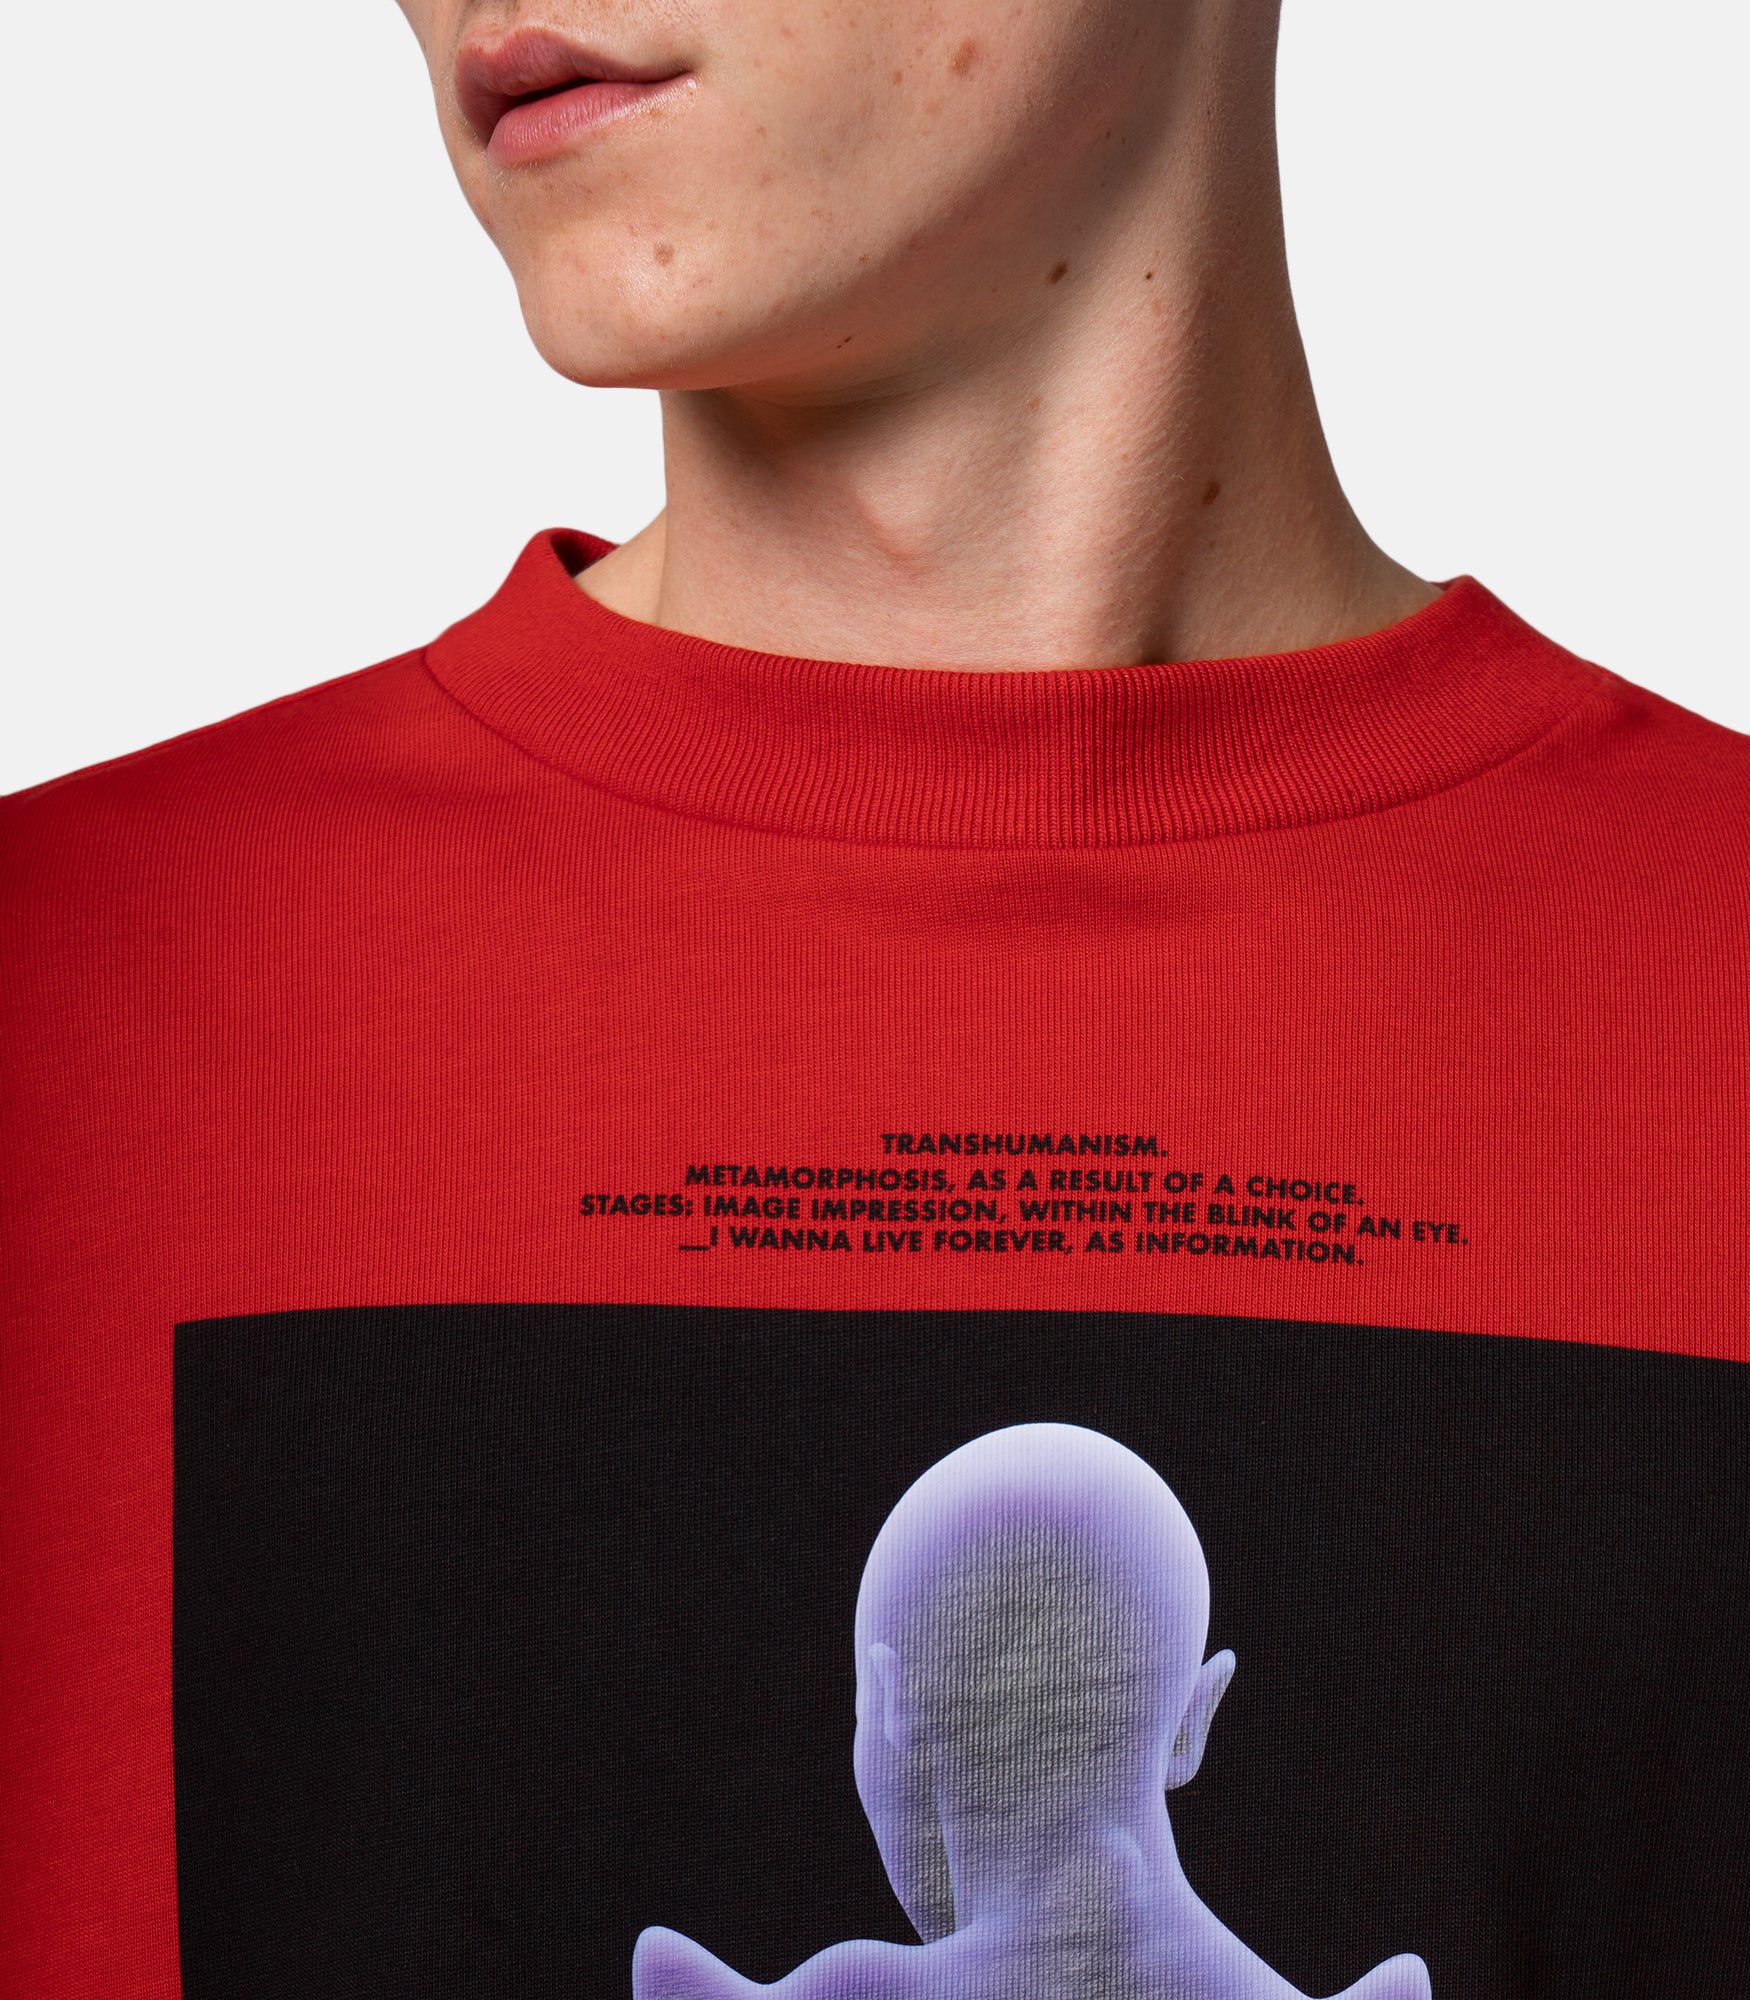 Transhuman Oversized Red T-shirt